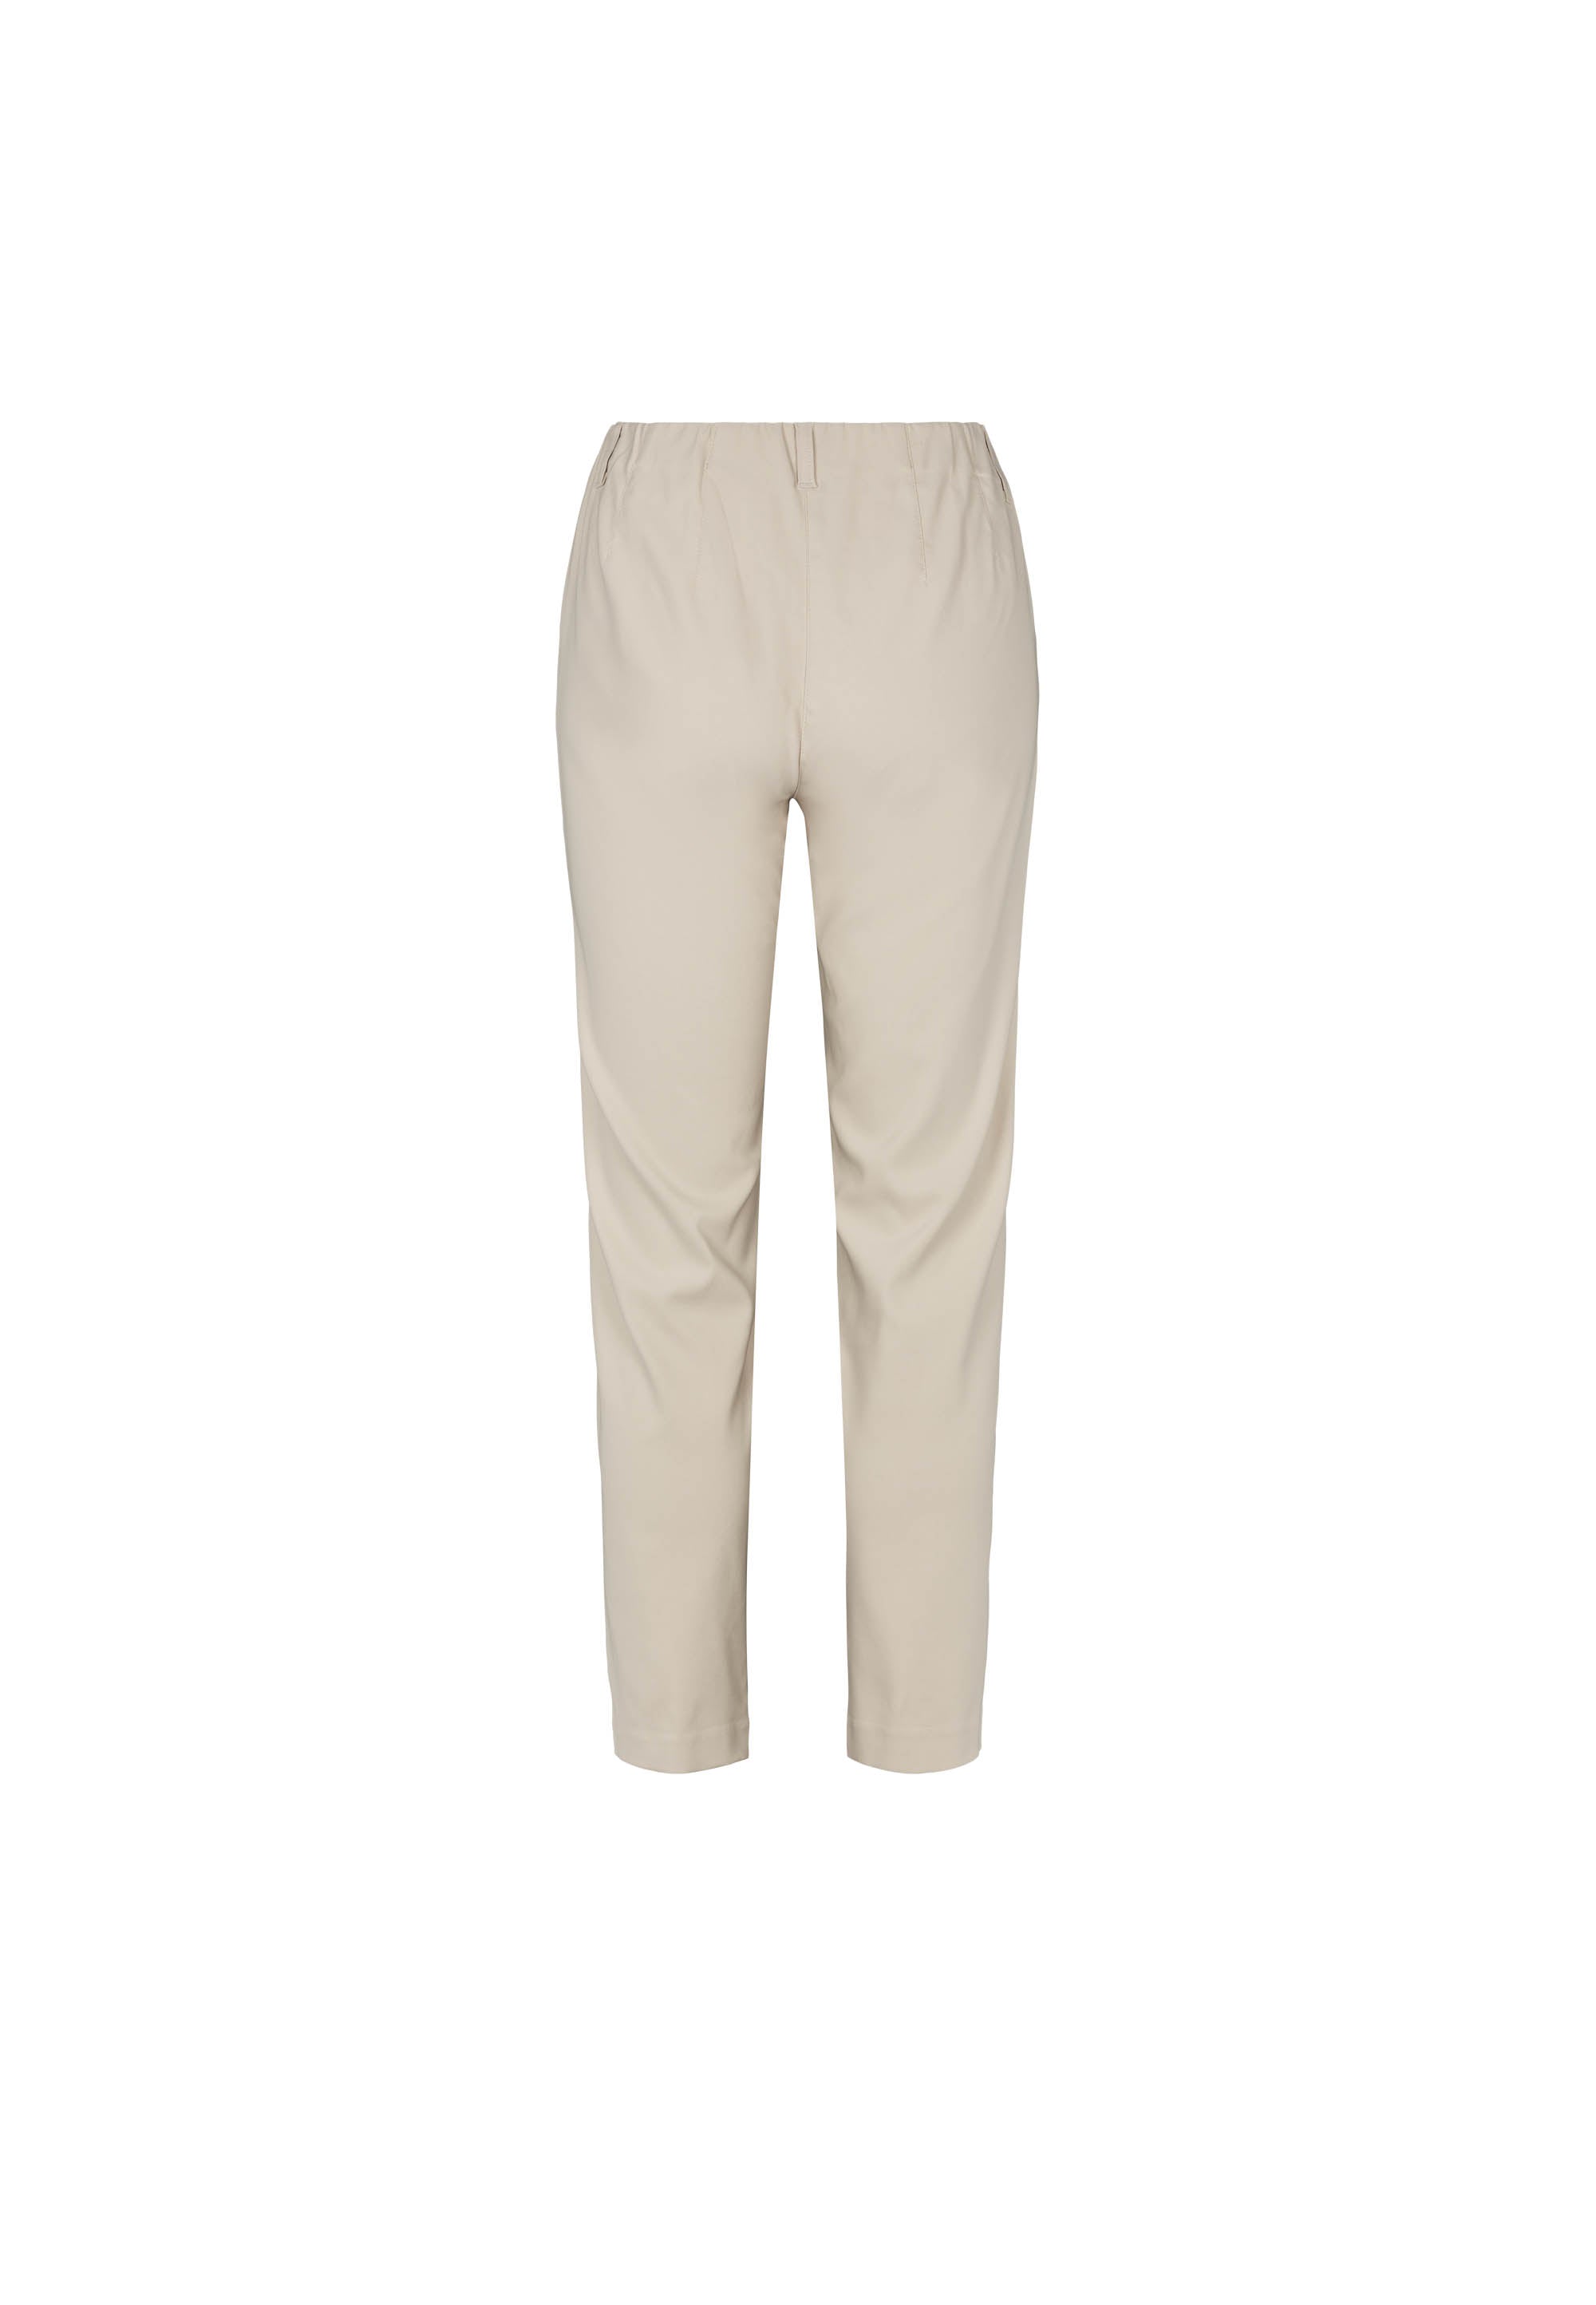 LAURIE  Taylor Regular - Short Length Trousers REGULAR 25000 Grey Sand